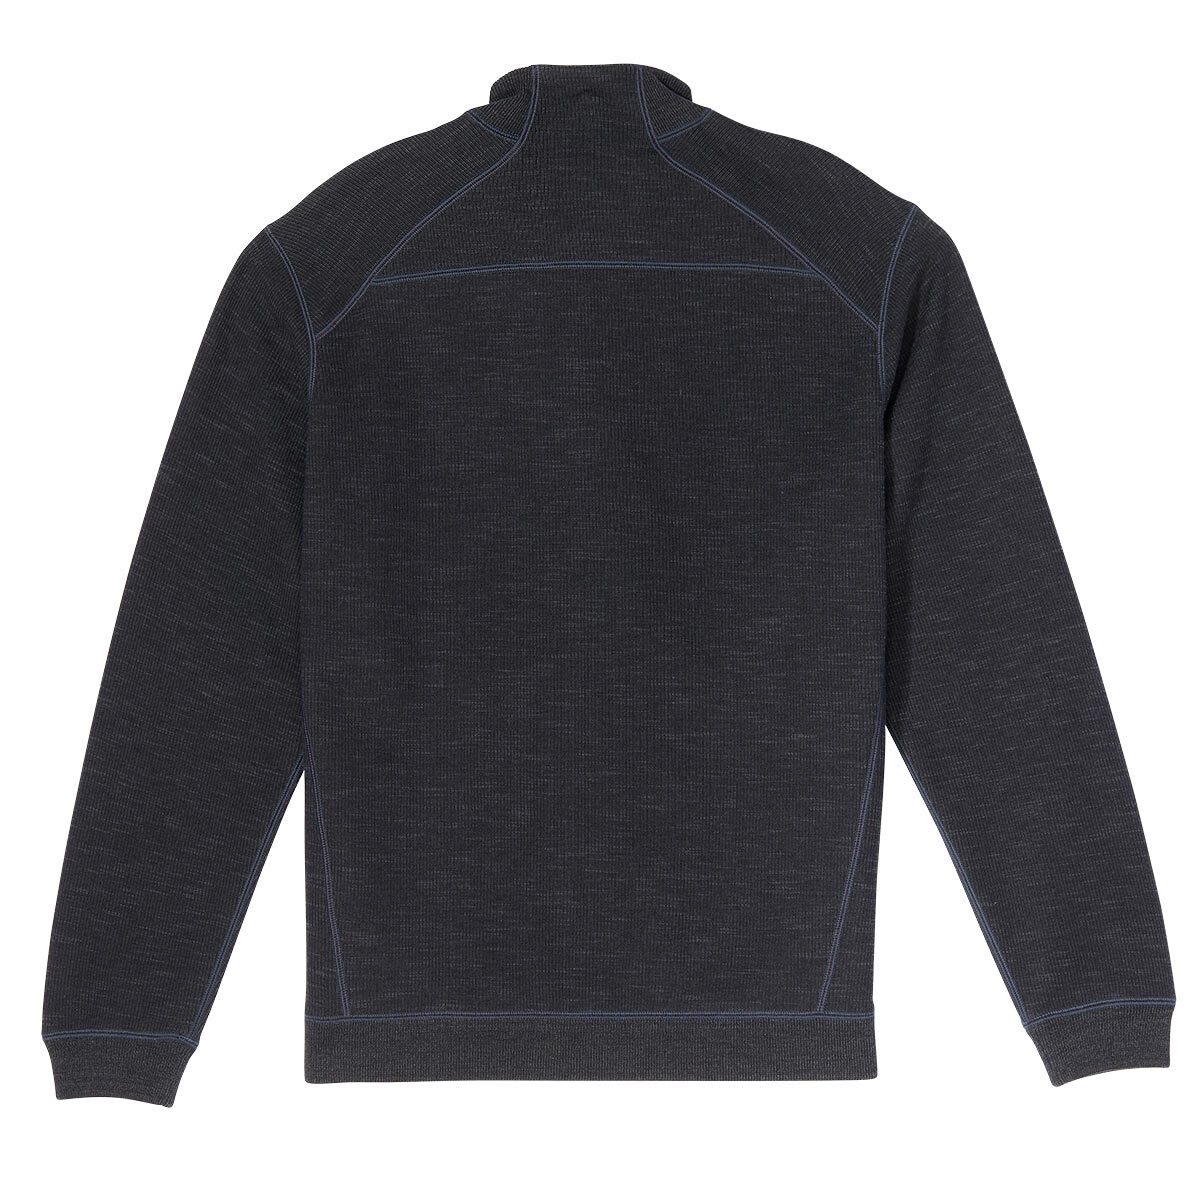 Kirkland Signature Men's Full Zip Sweater in Charcoal, Medium | Costco UK